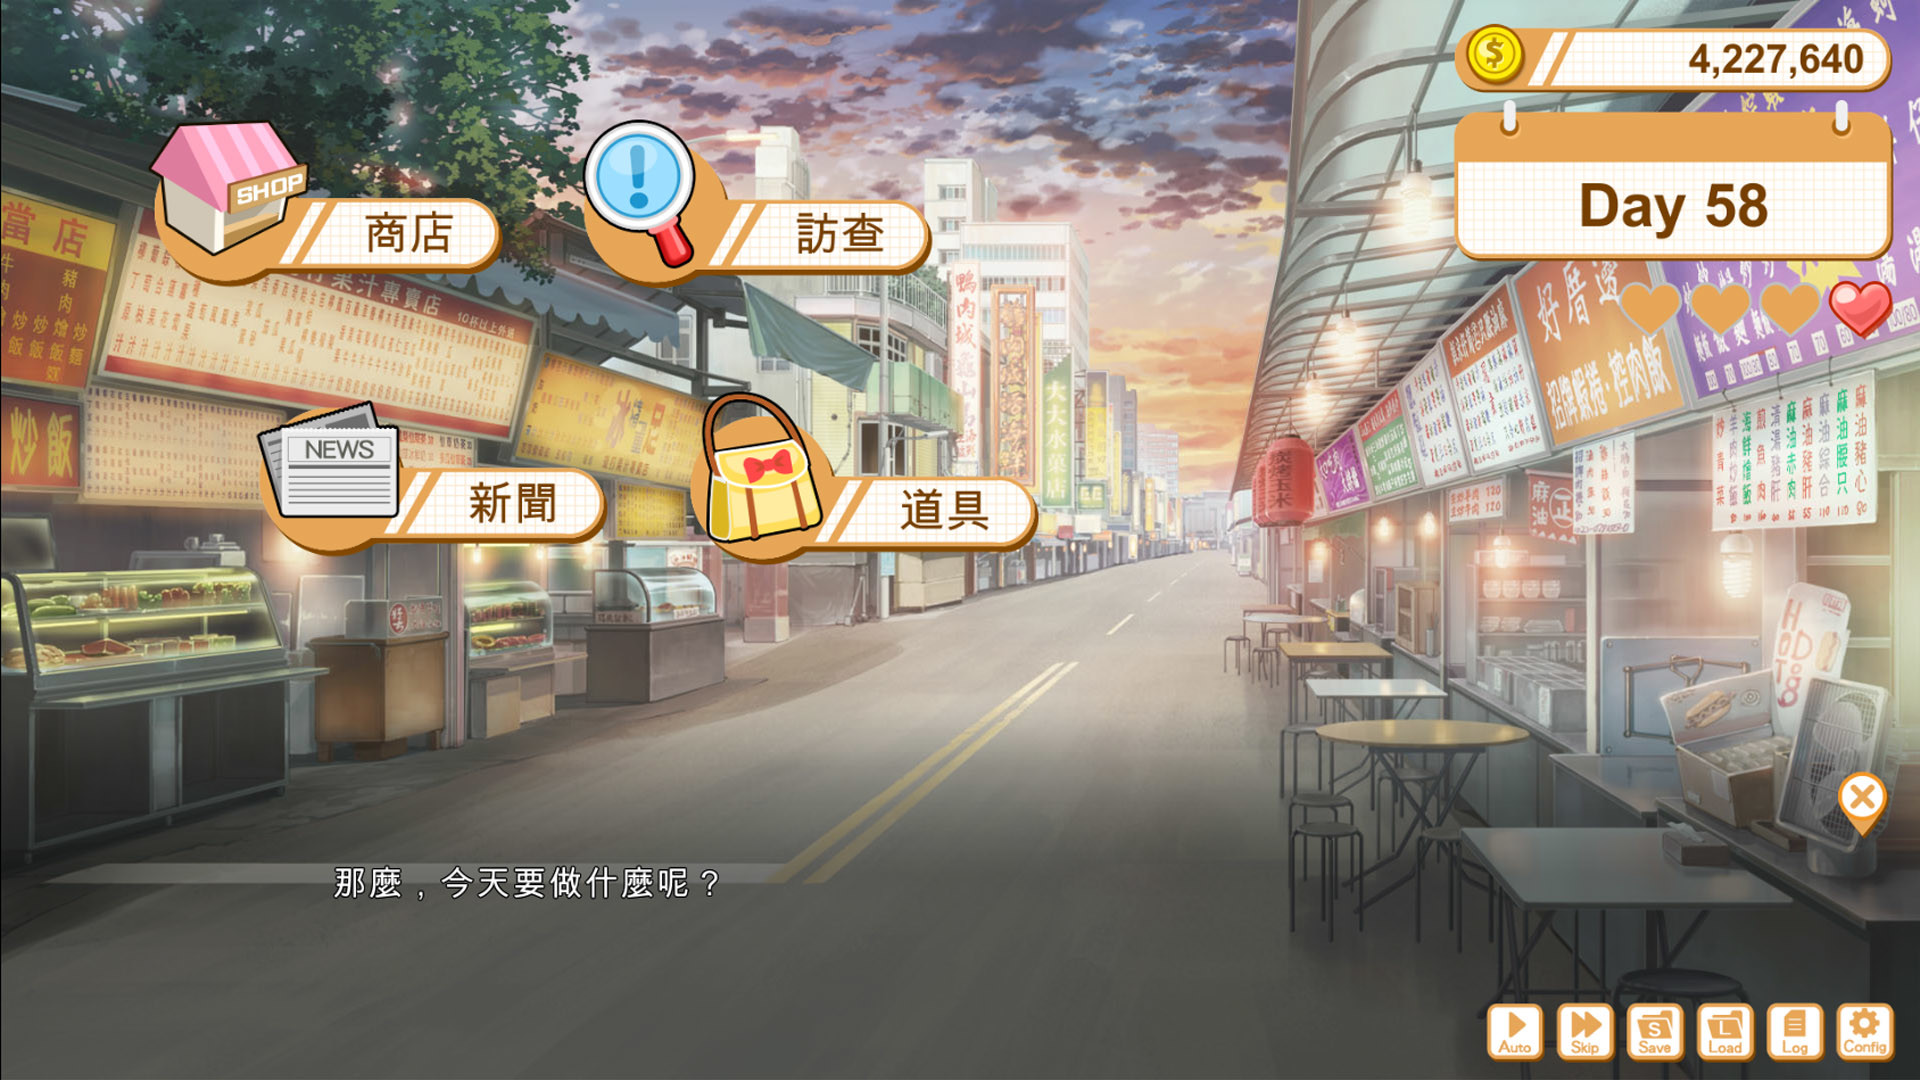 【SLG/中文】食用系少女:美食內戰 Steam官方中文版【8.5G】